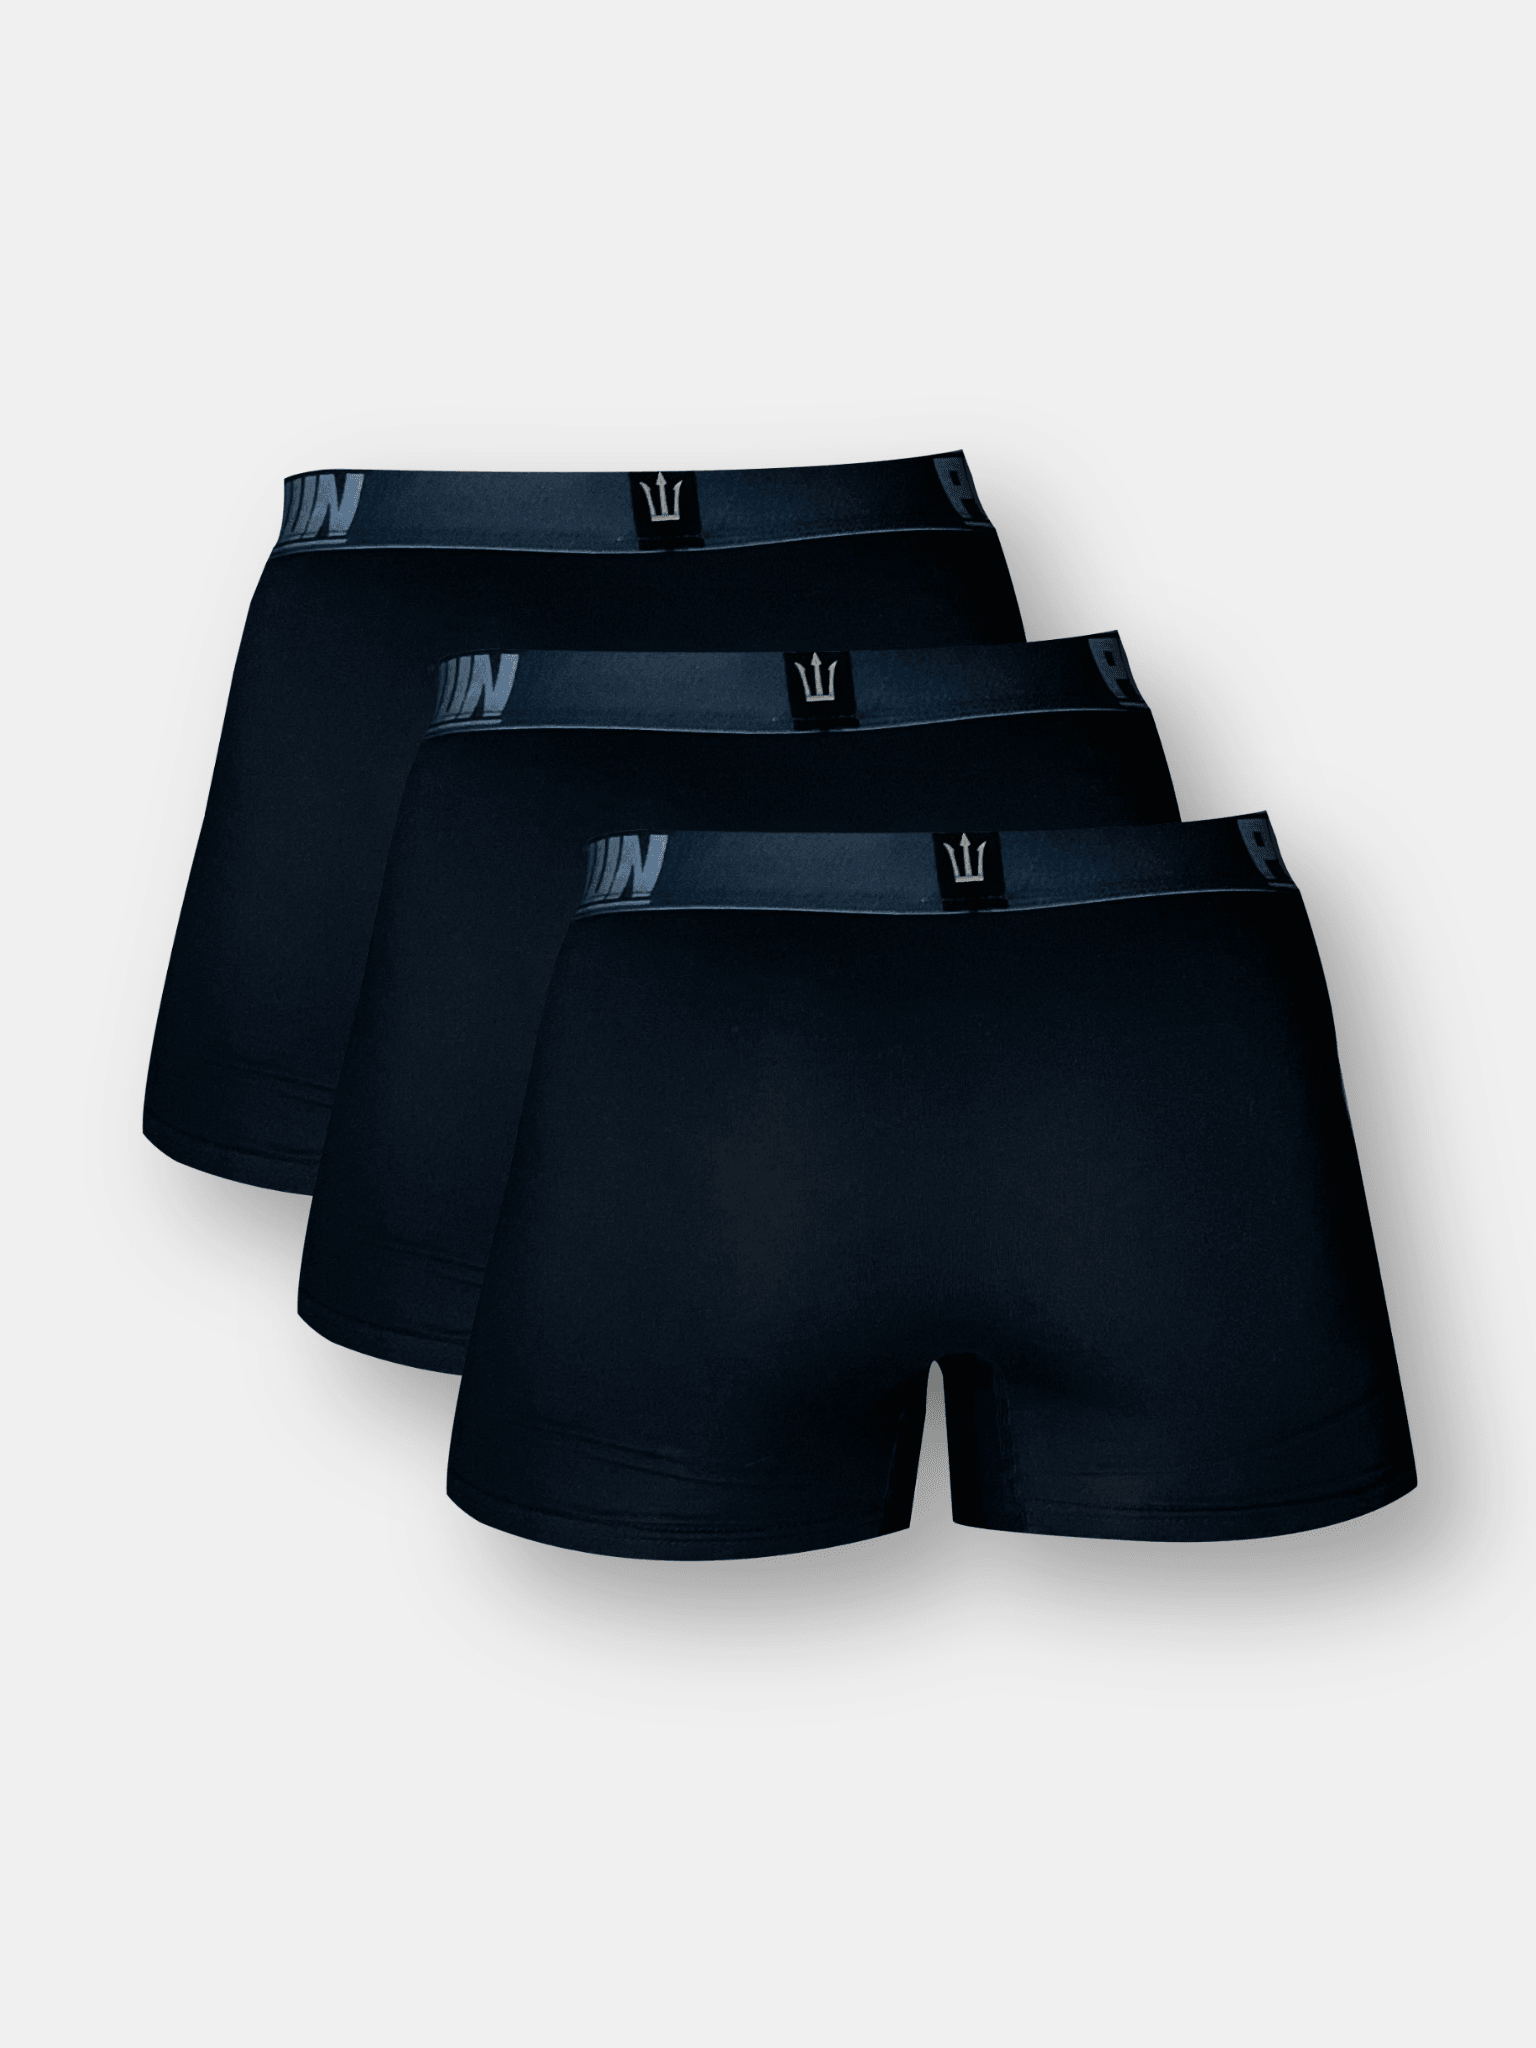 FORCEBOXER Triple | Men Underwear